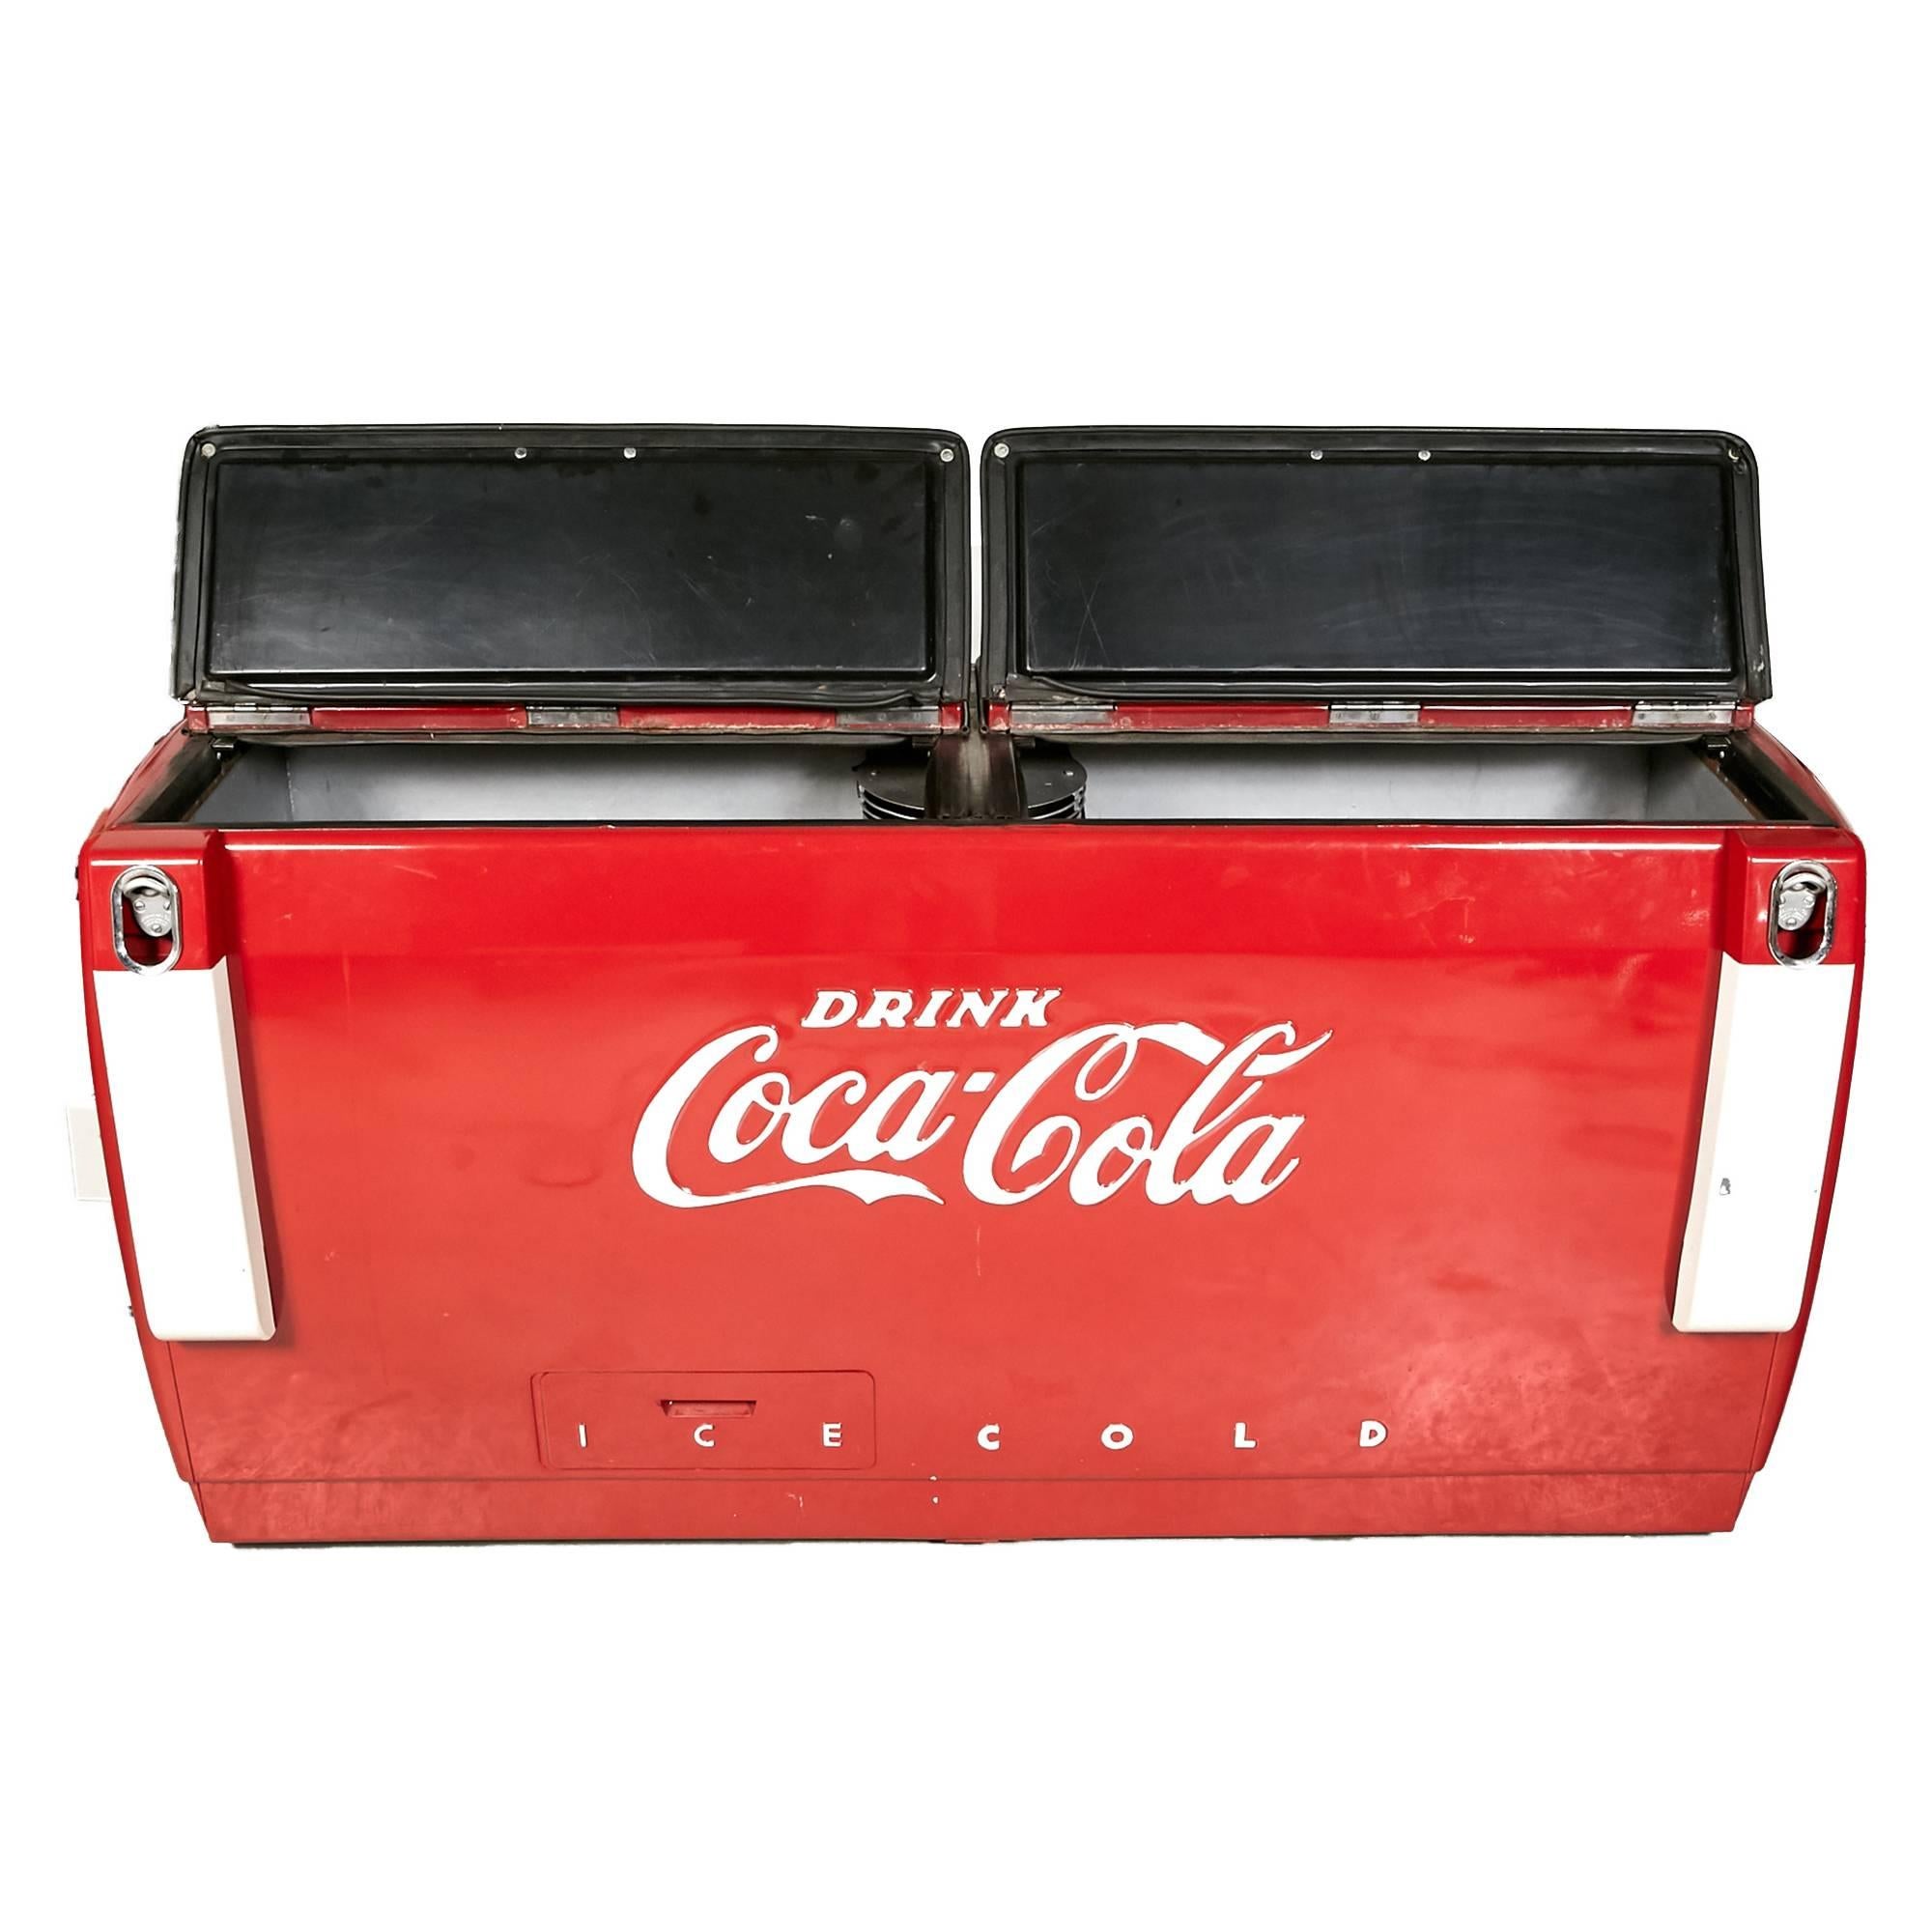 20th Century Coca Cola Soda Chest by Cavalier, 1960s